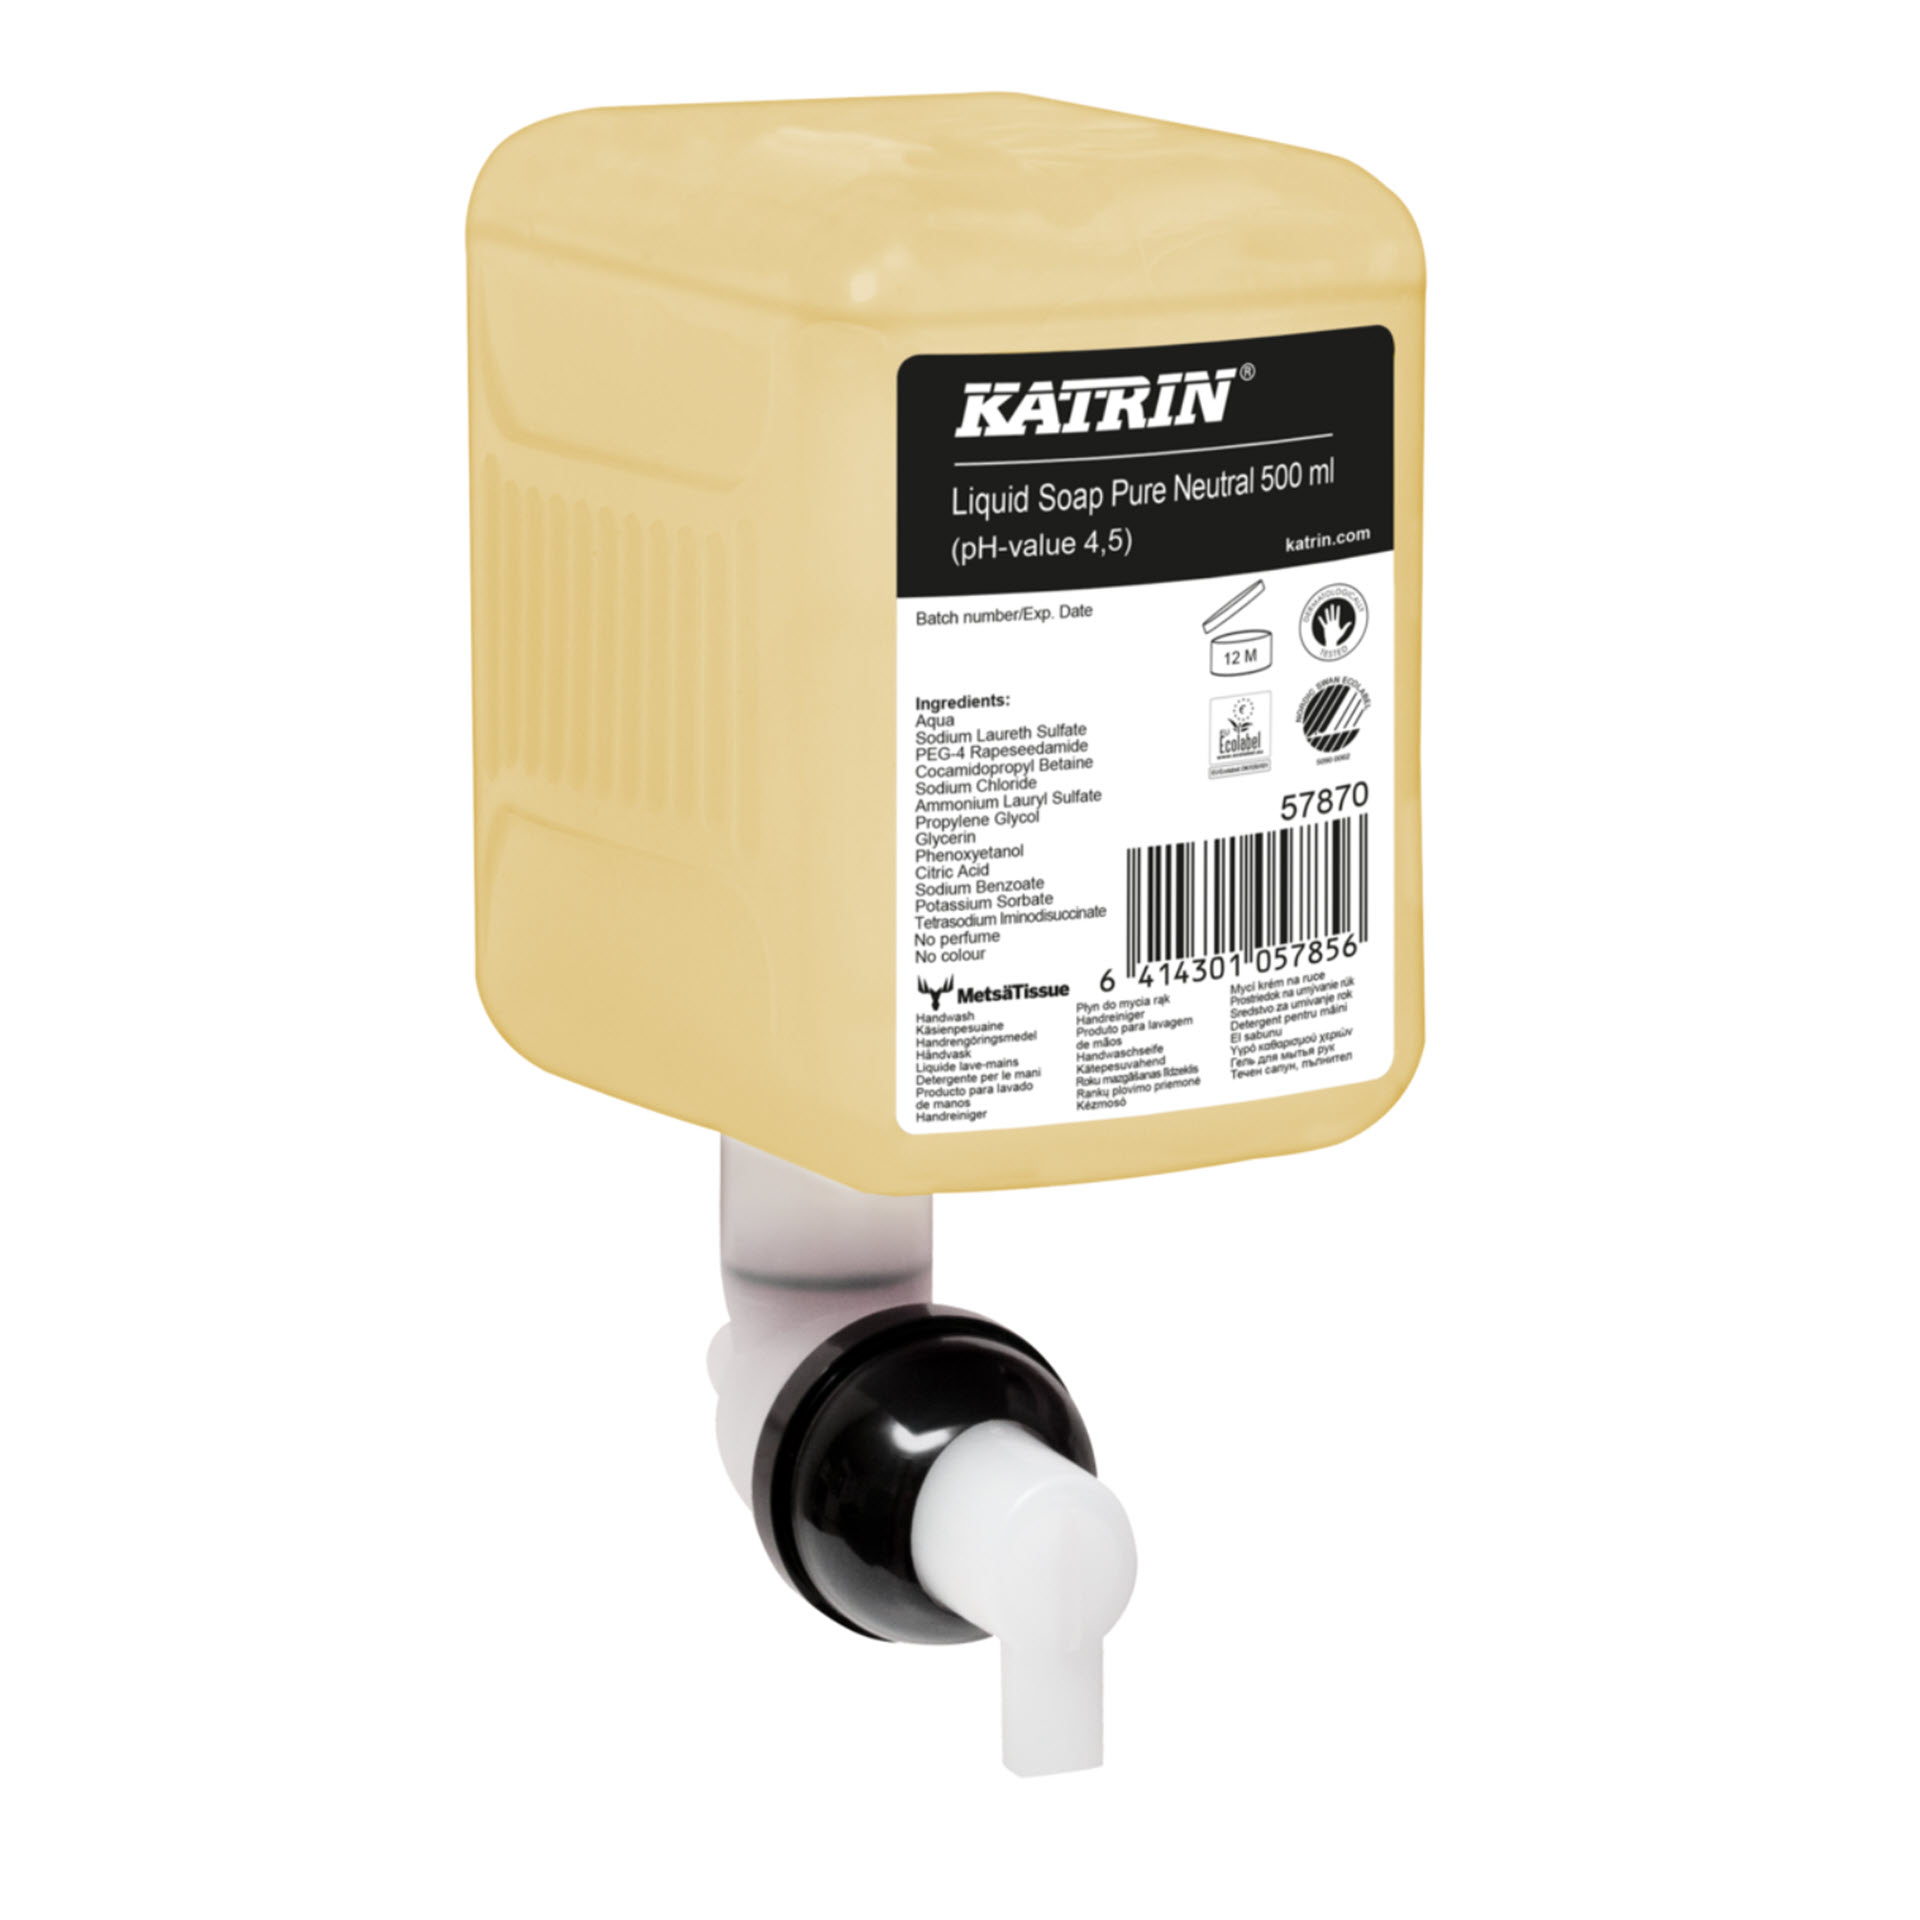 Katrin Handwaschseife "Pure Neutral" 500 ml Patronen - 12 Patronen - 578700